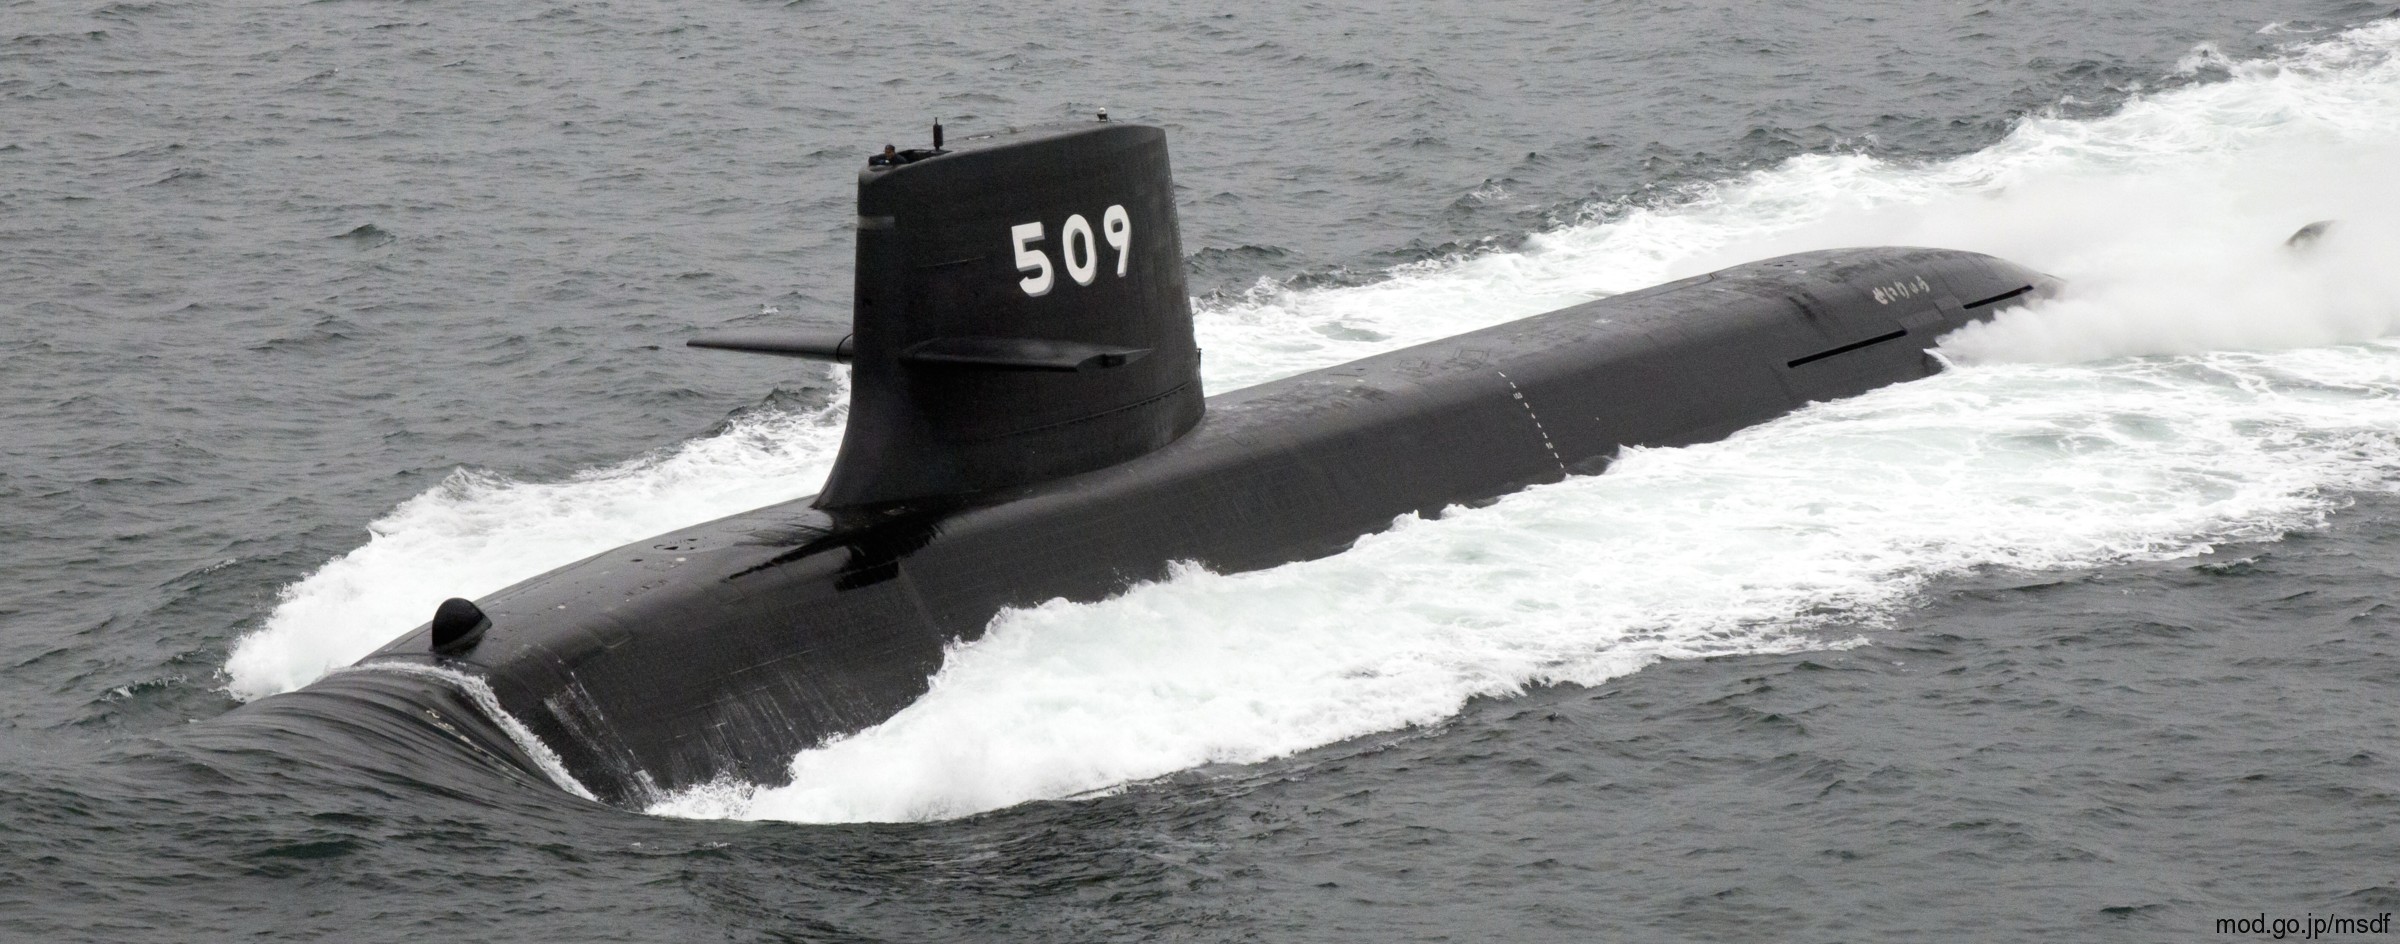 ss-509 js seiryu 16ss soryu class attack submarine ssk japan maritime self defense force jmsdf 02